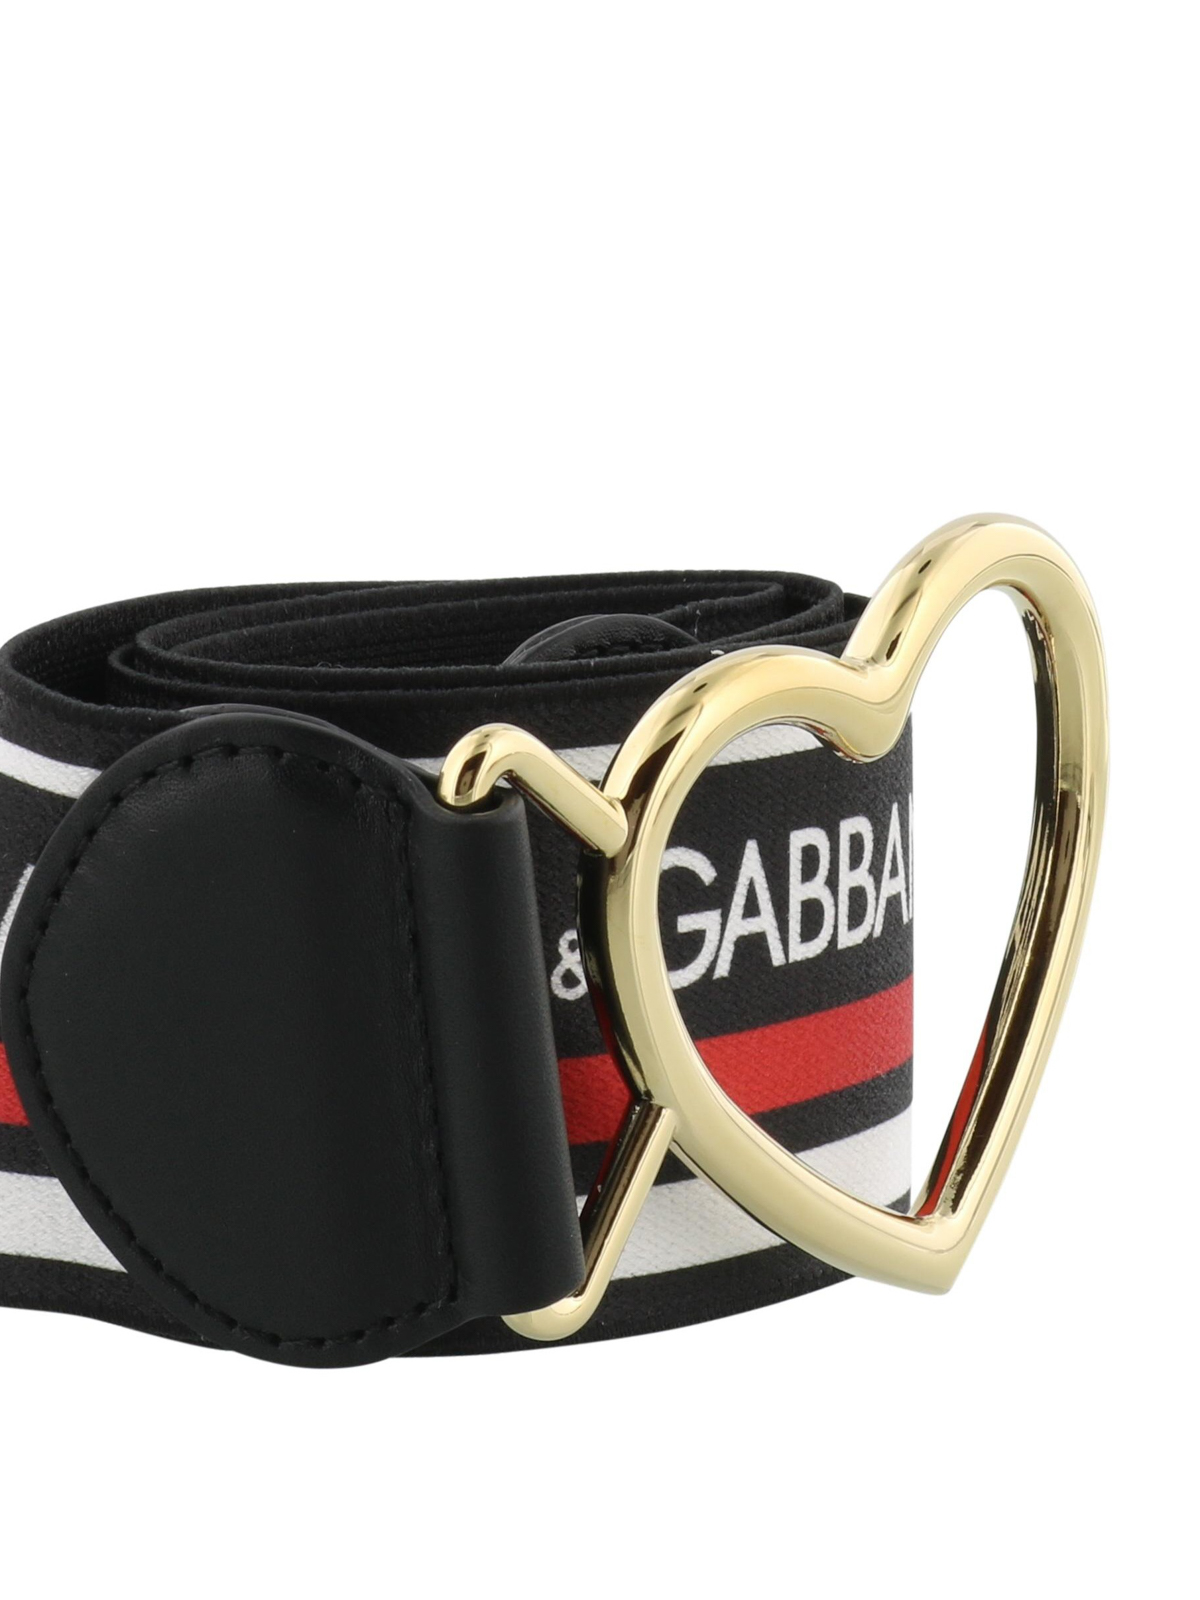 dolce and gabbana heart belt